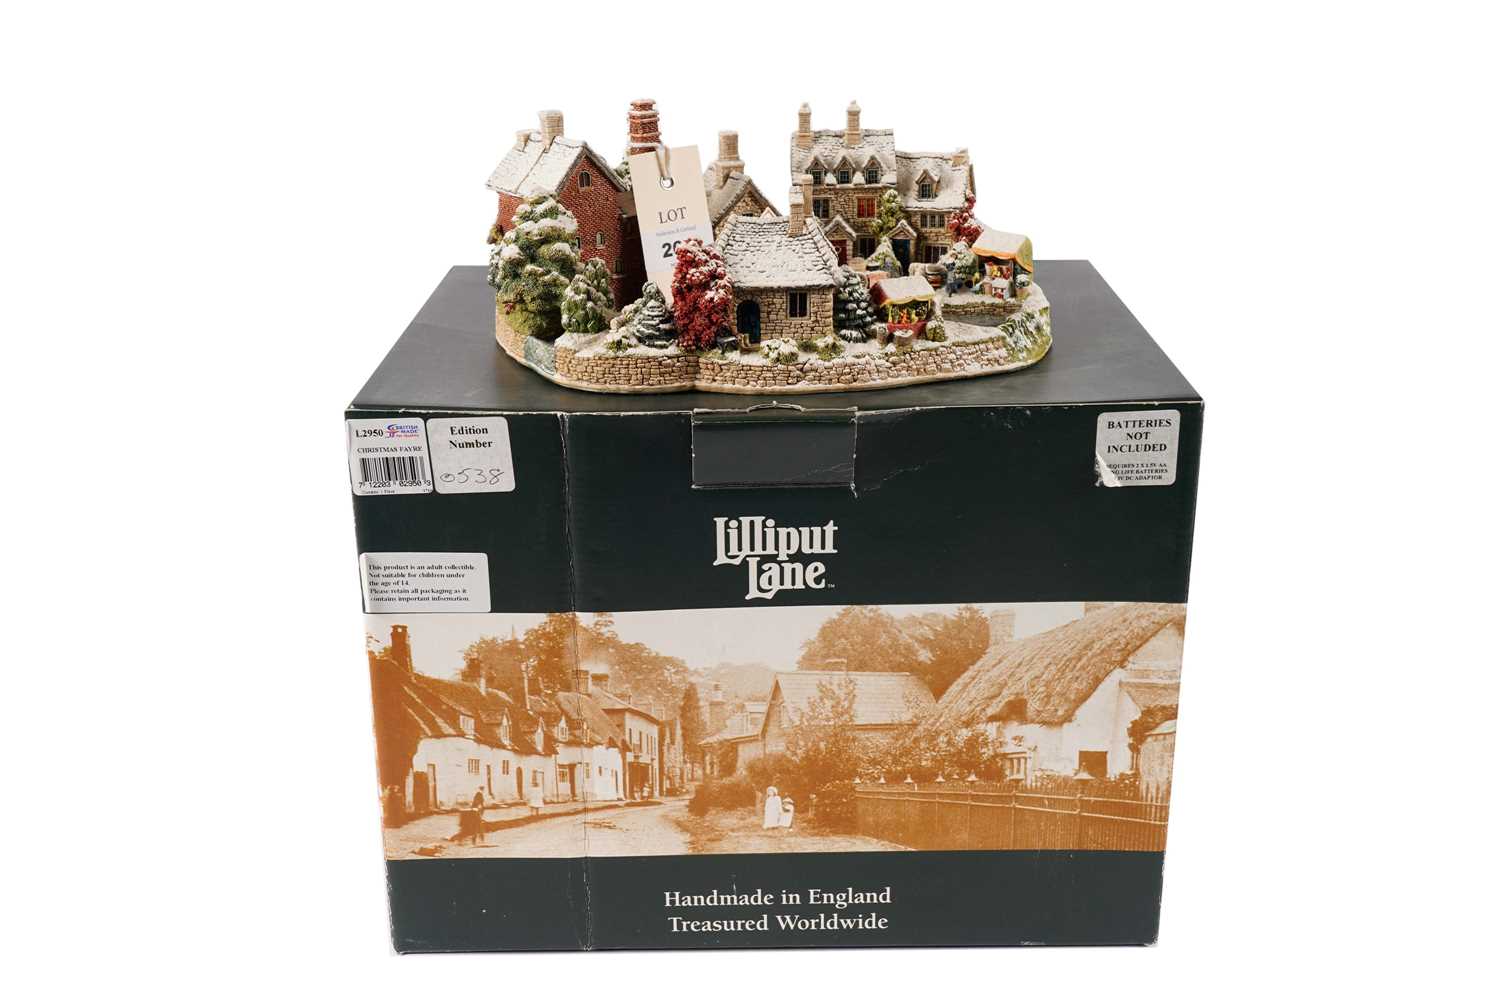 A Lilliput Lane limited edition model